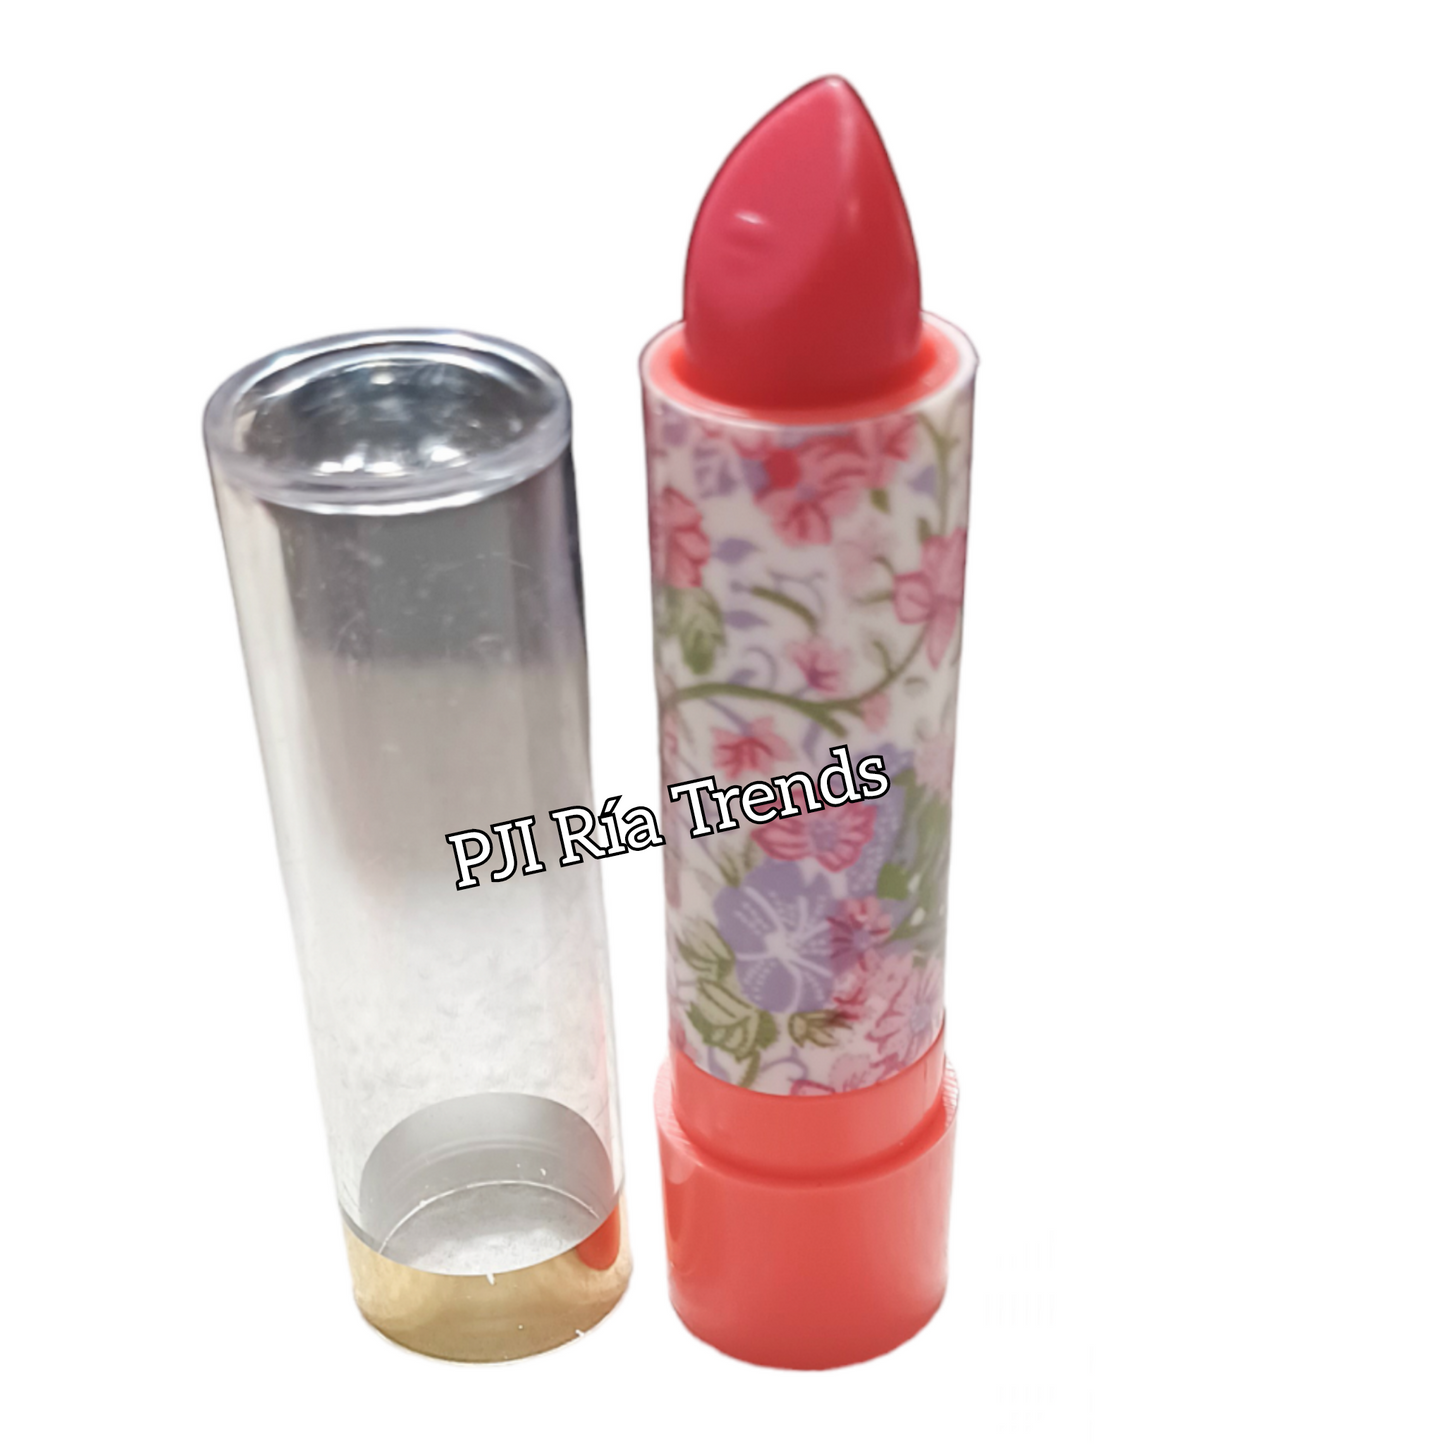 OG Princess Magic Lipstick Infused with Aloe Vera & Vitamin E